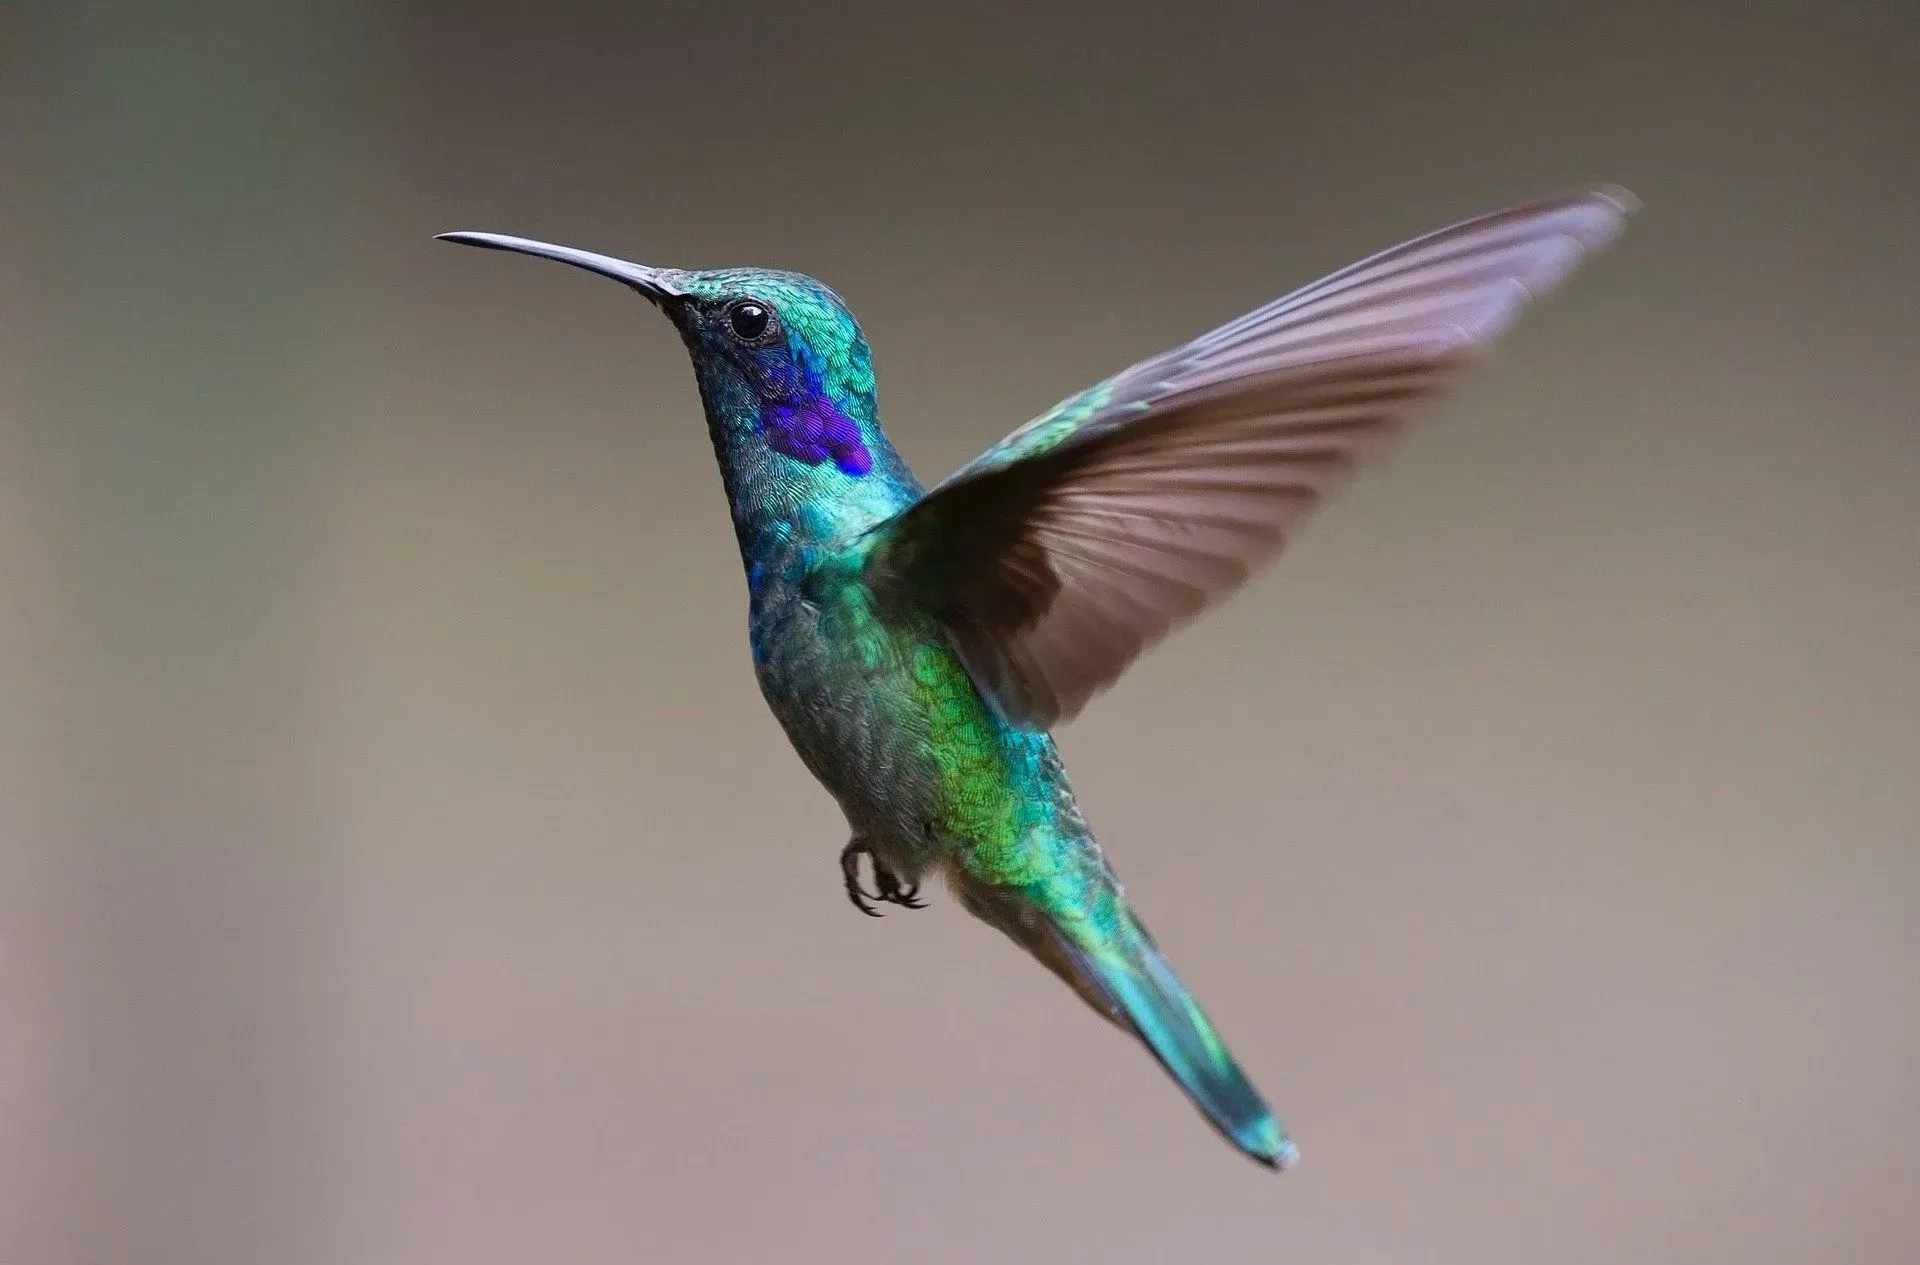 Hummingbird heart rate facts often surprise avid bird watchers.